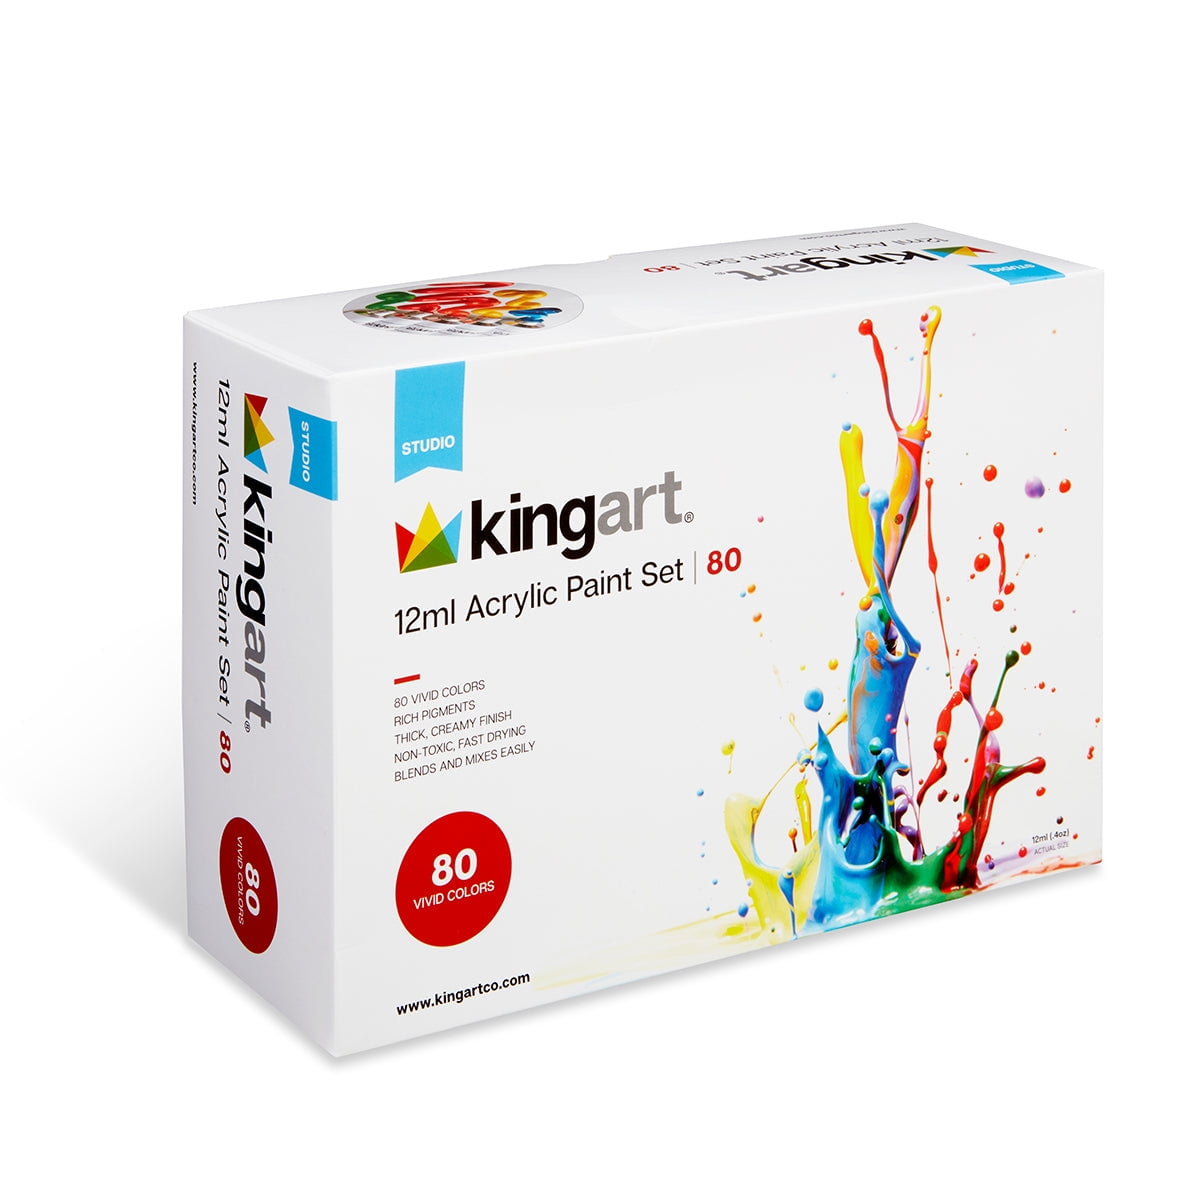 Kingart Studio Acrylic Craft Paint, 60ml (2oz) Bottle, Set of 36 Classic  and Vibrant Shades 